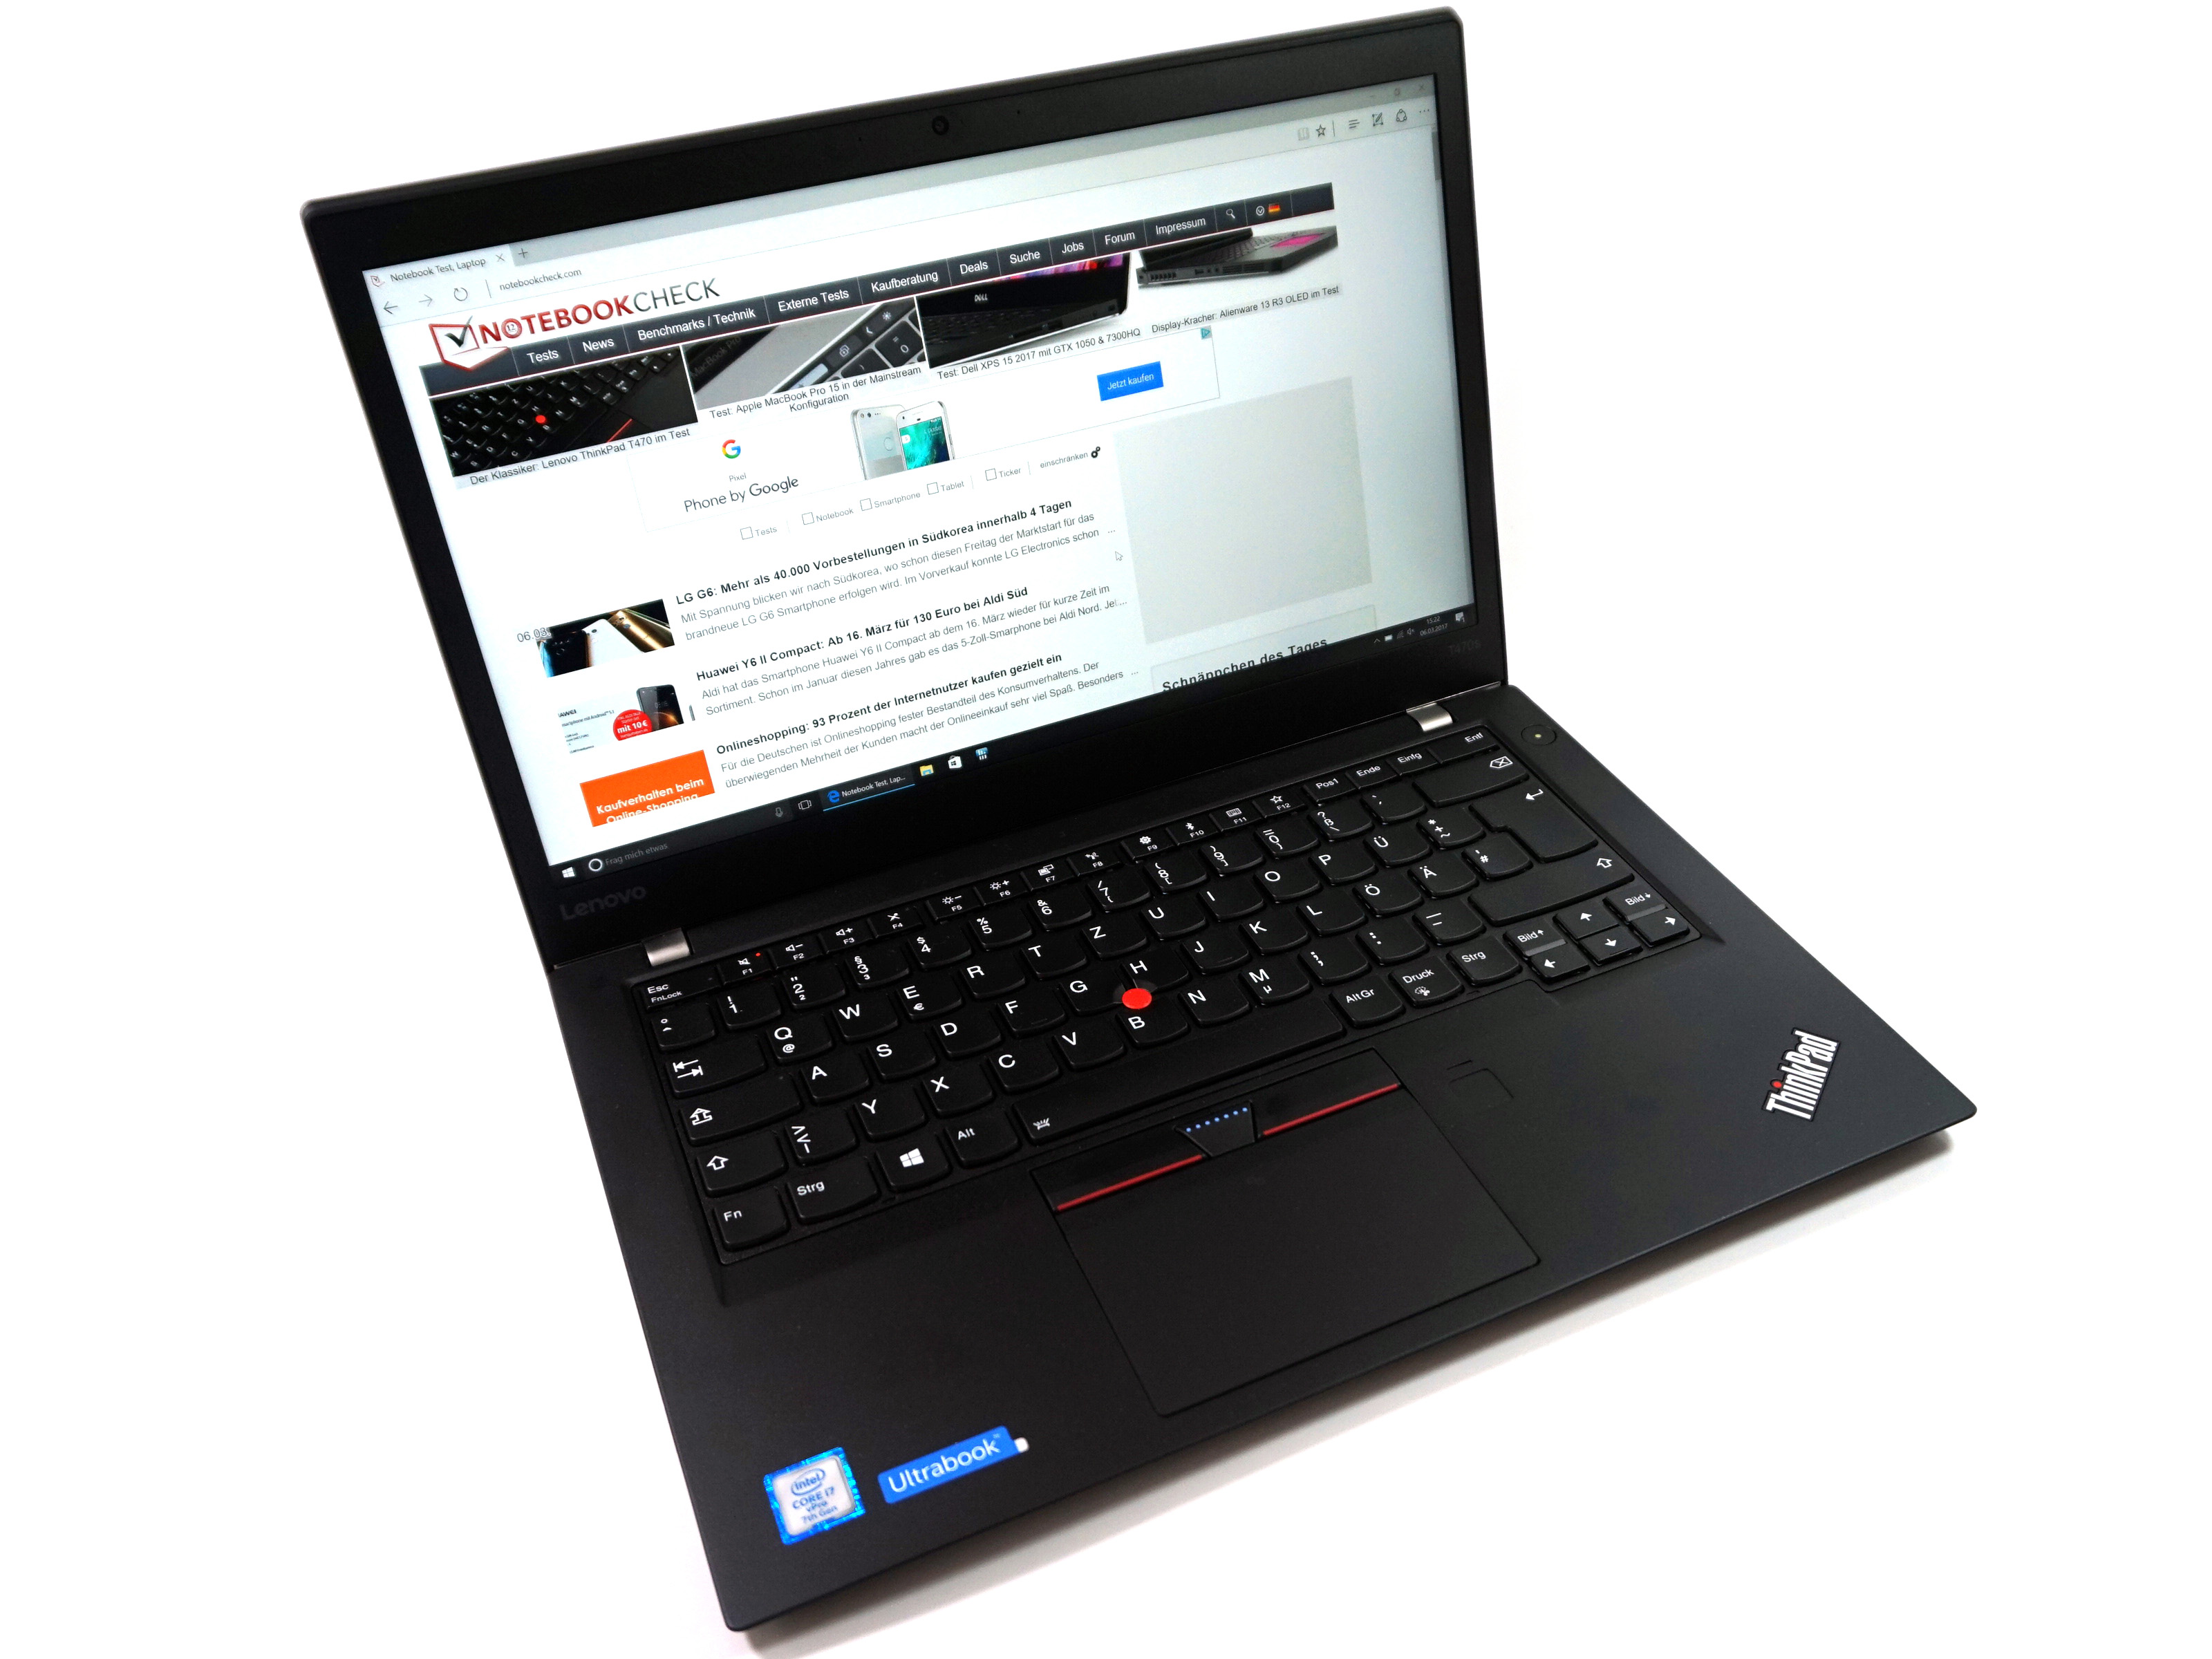 ThinkPad i7, WQHD) Laptop Review - NotebookCheck.net Reviews